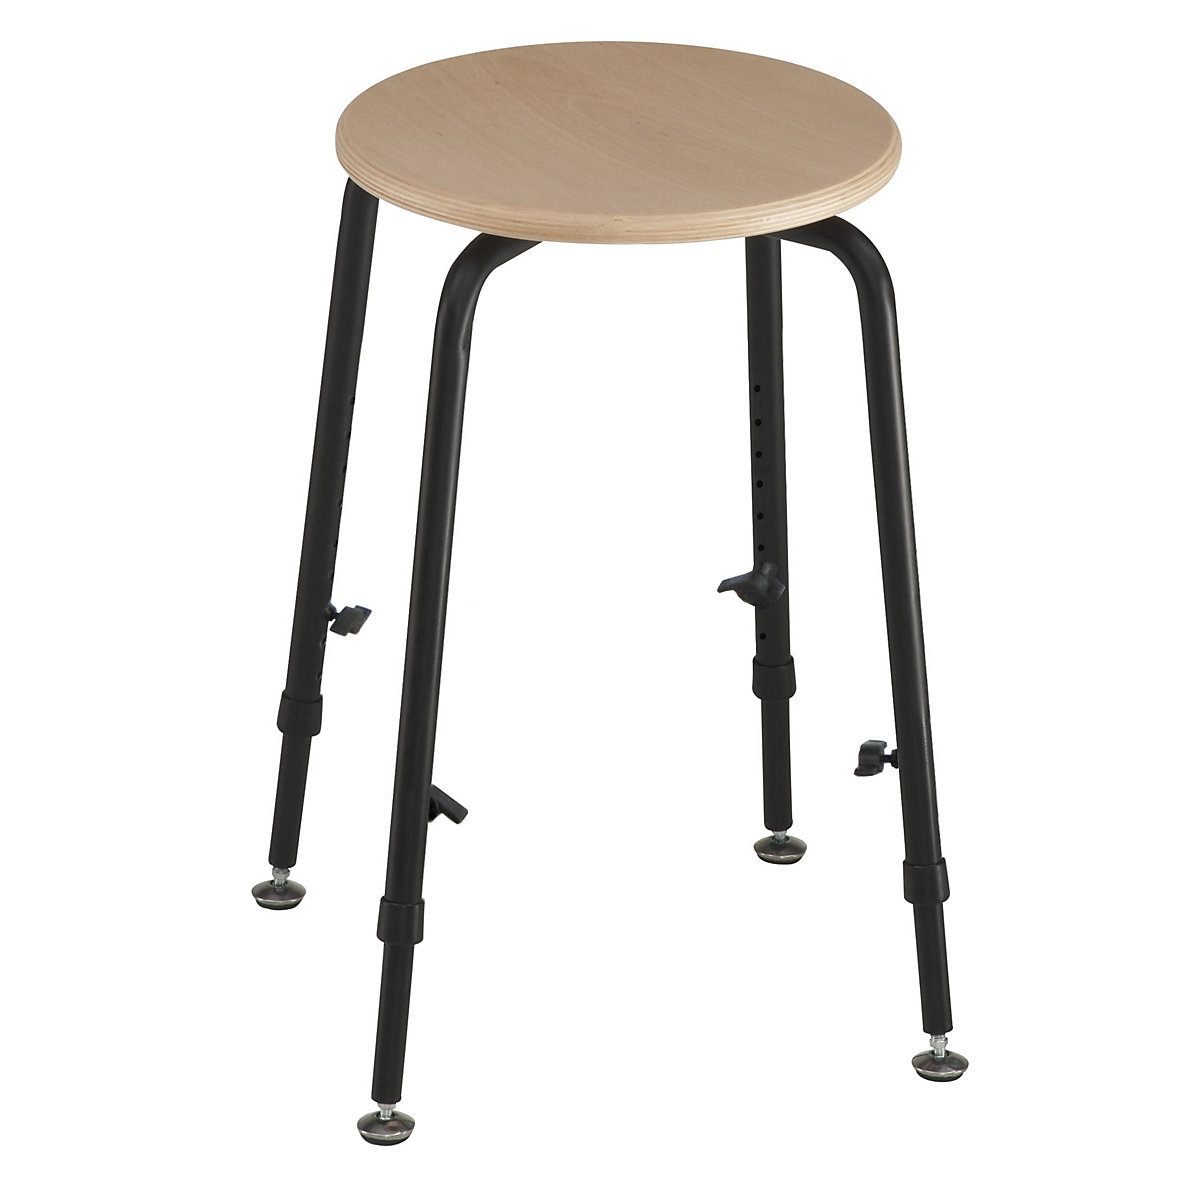 Industrial stool, height adjustable - meychair